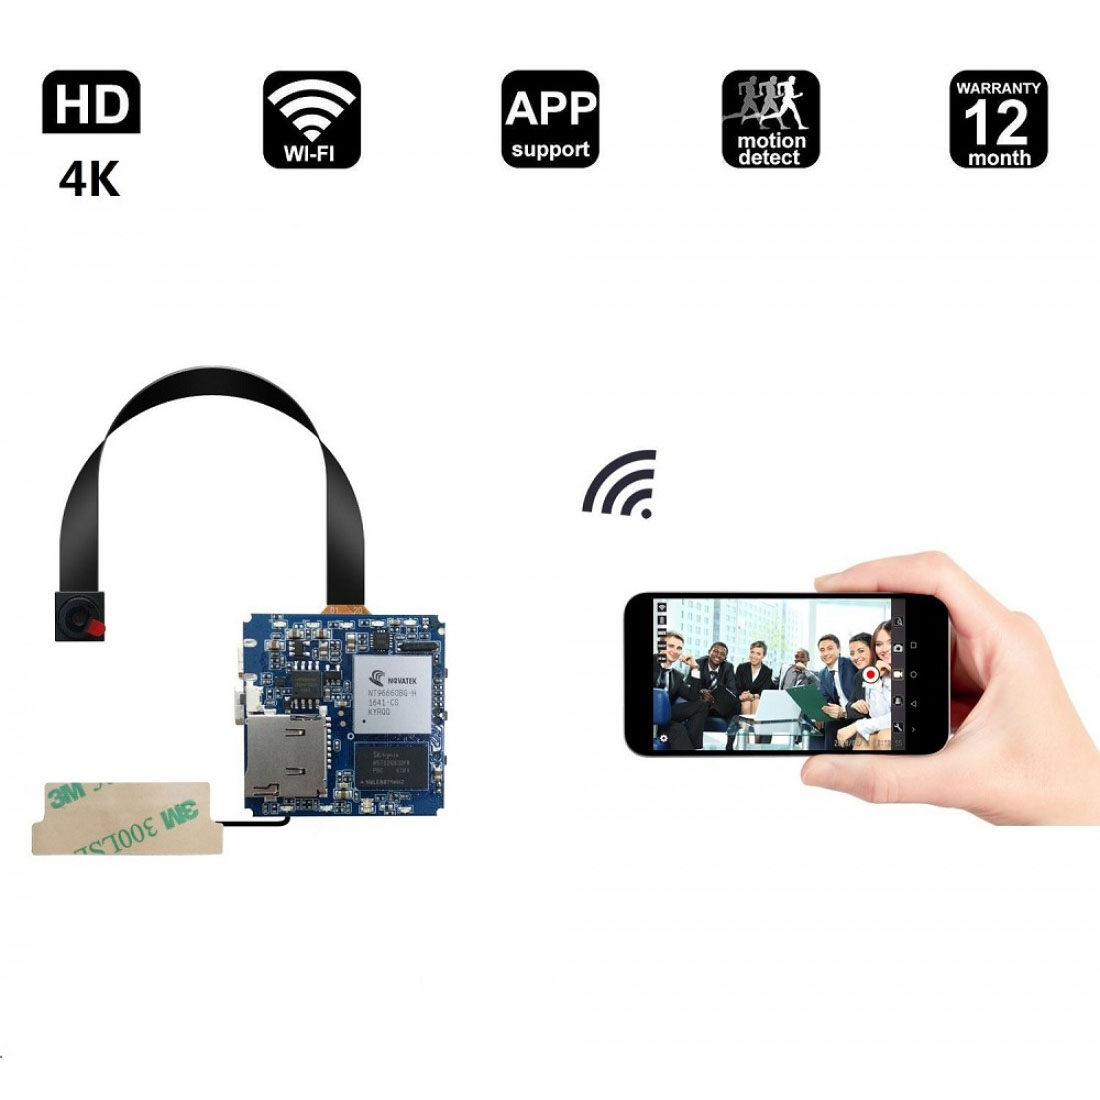 4K ミニカメラ、フル 1080p HD 隠しカメラ、WIFI ワイヤレス [動体検知、DIY カメラ、アプリ制御] ナニーカム |ホーム、キッズ、ベビー、ペット監視カメラ